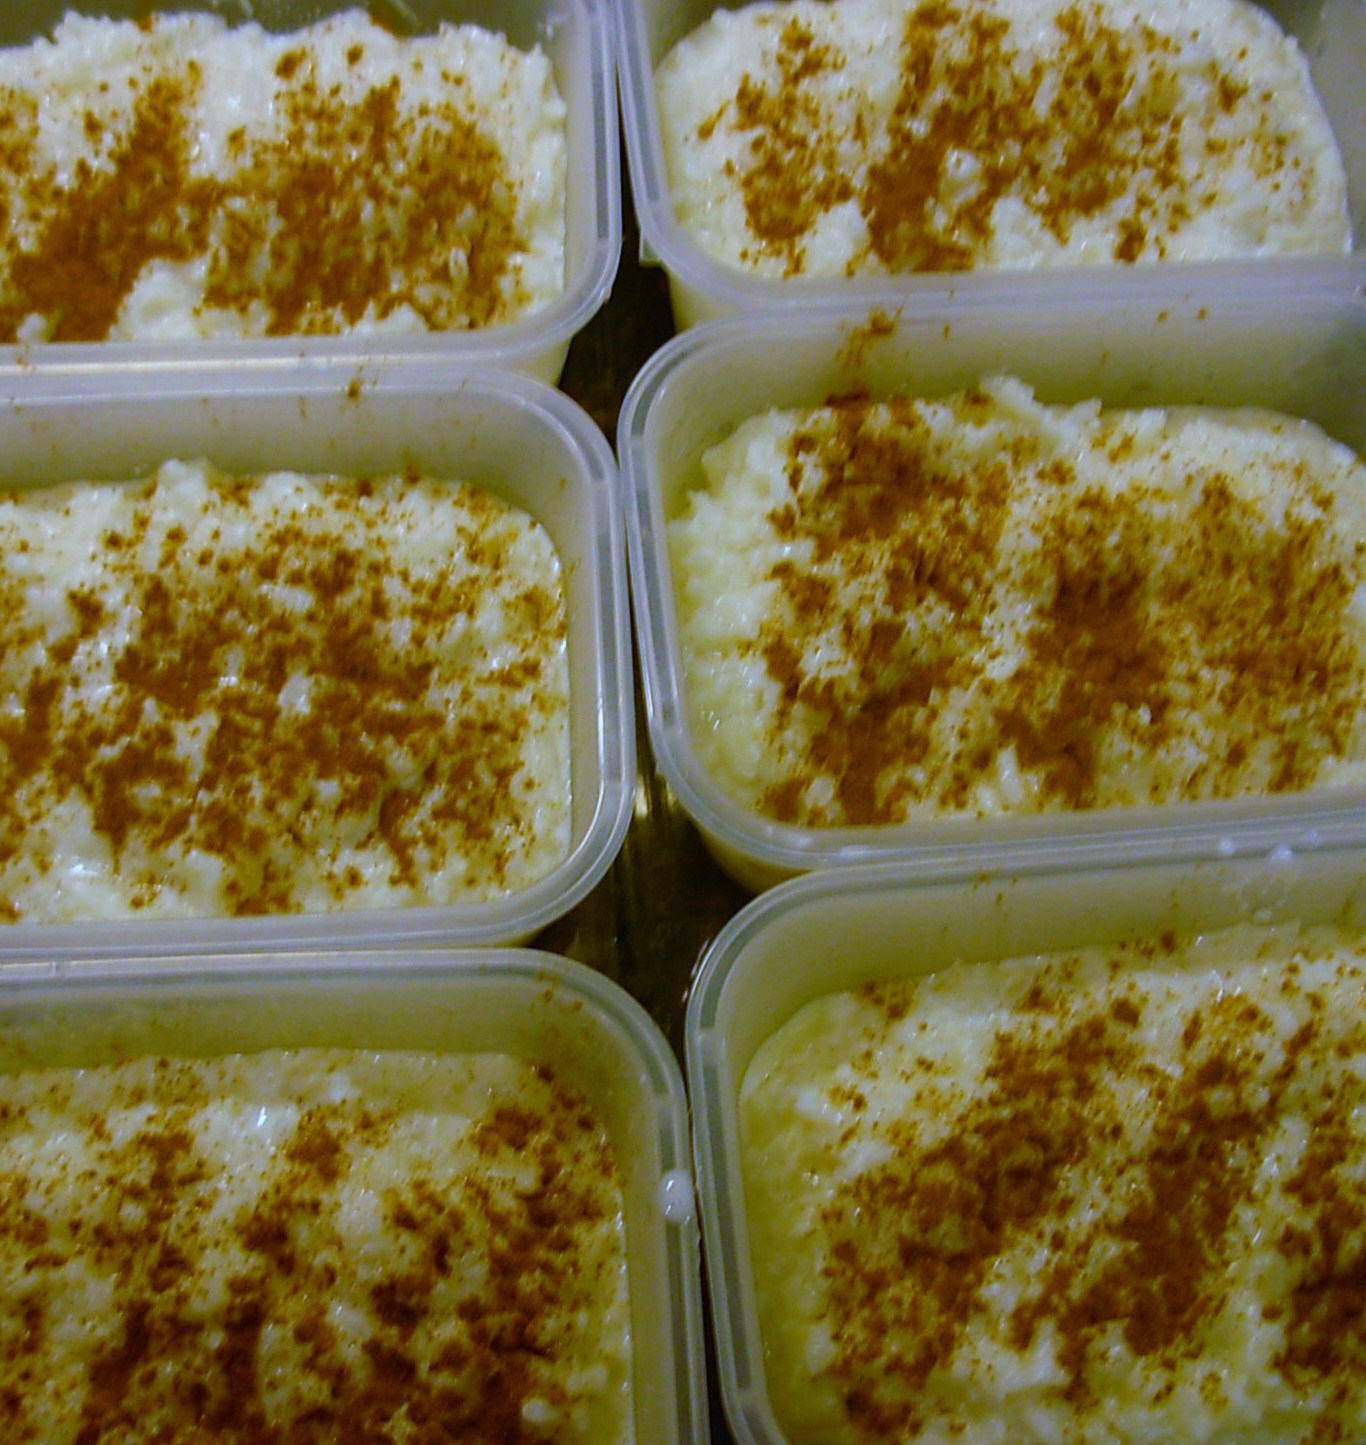 gatnabour: rice pudding